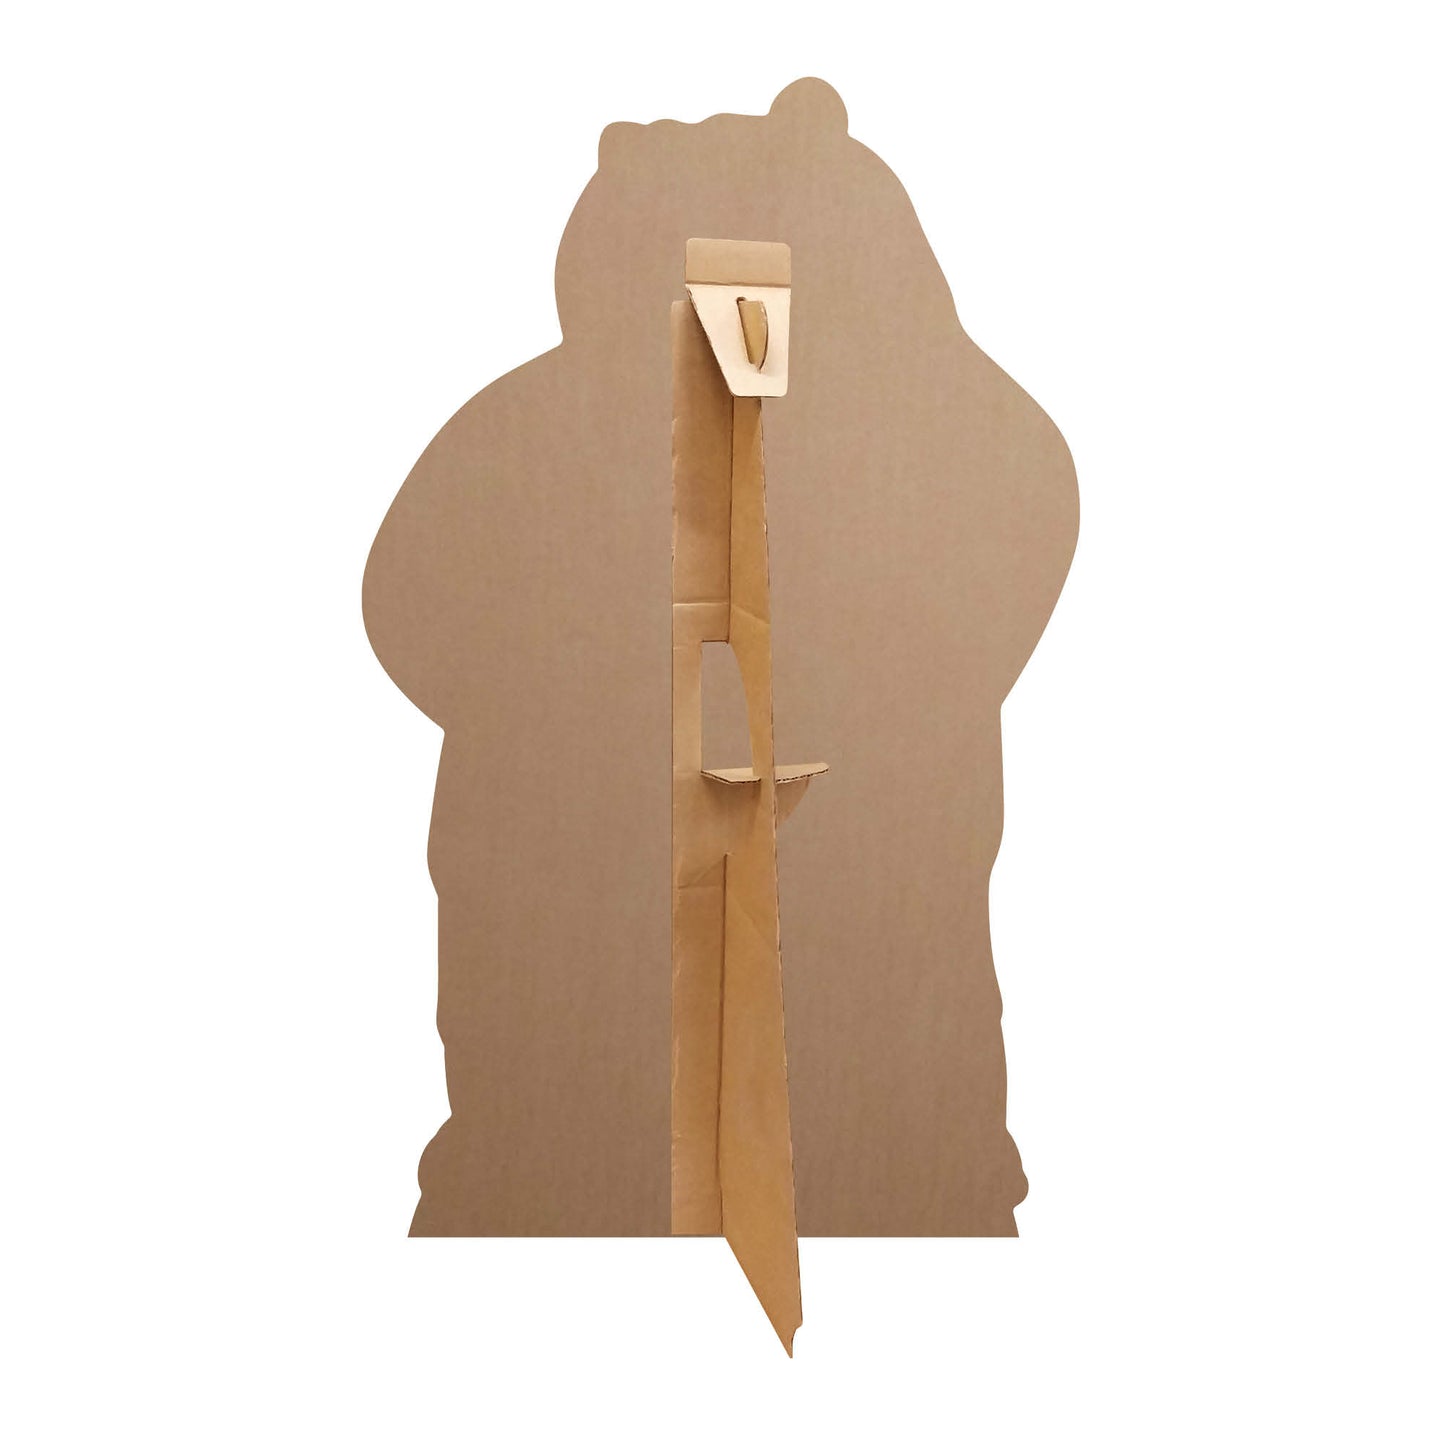 SC918 Po (Kung Fu Panda) (STAR MINI) Cardboard Cut Out Height 95cm